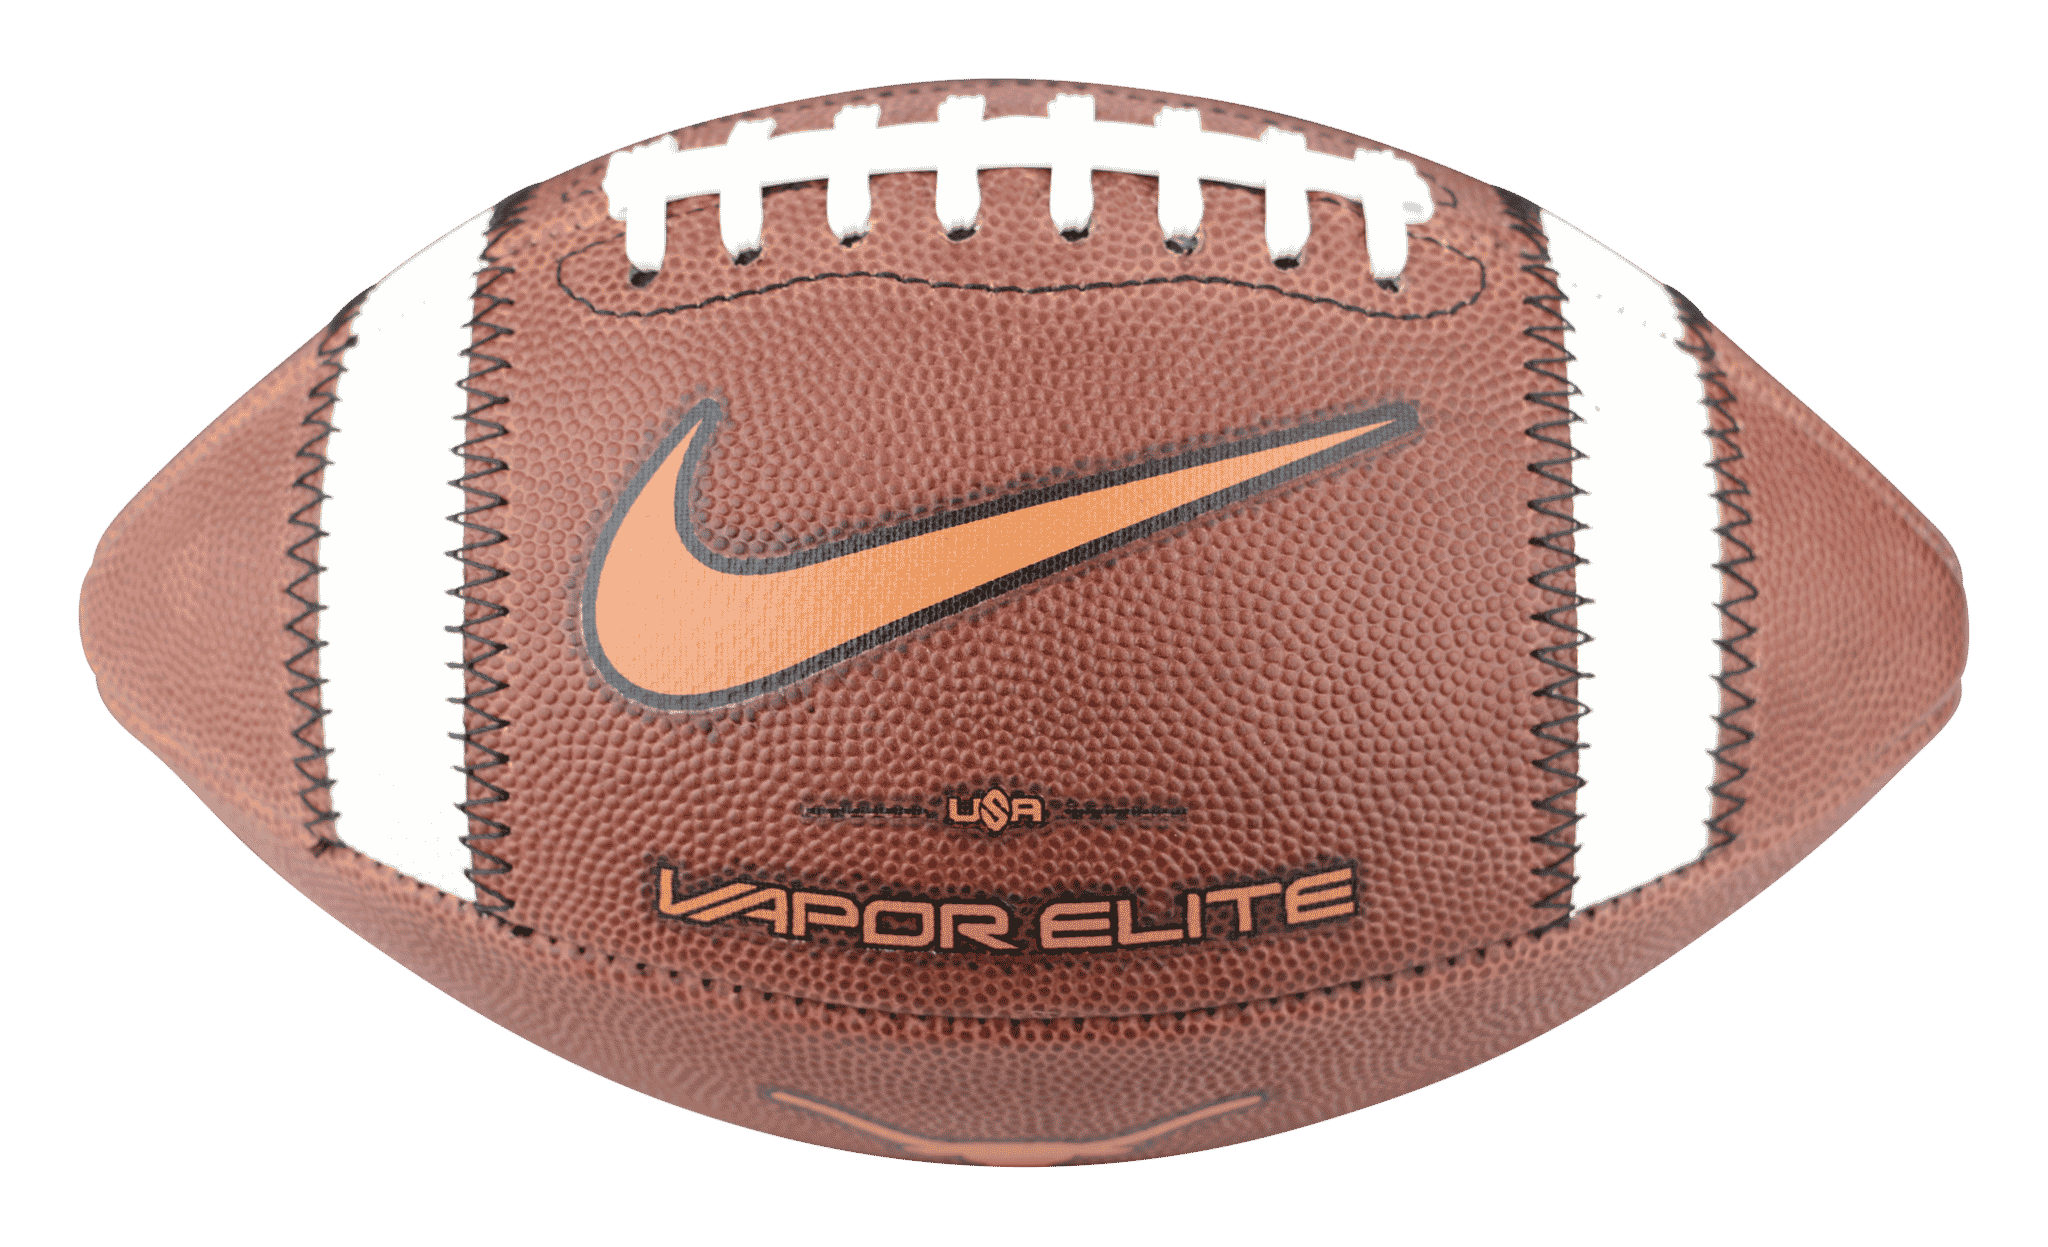 República Son Claire Texas Longhorns | Official Nike Game Football - Big Game USA